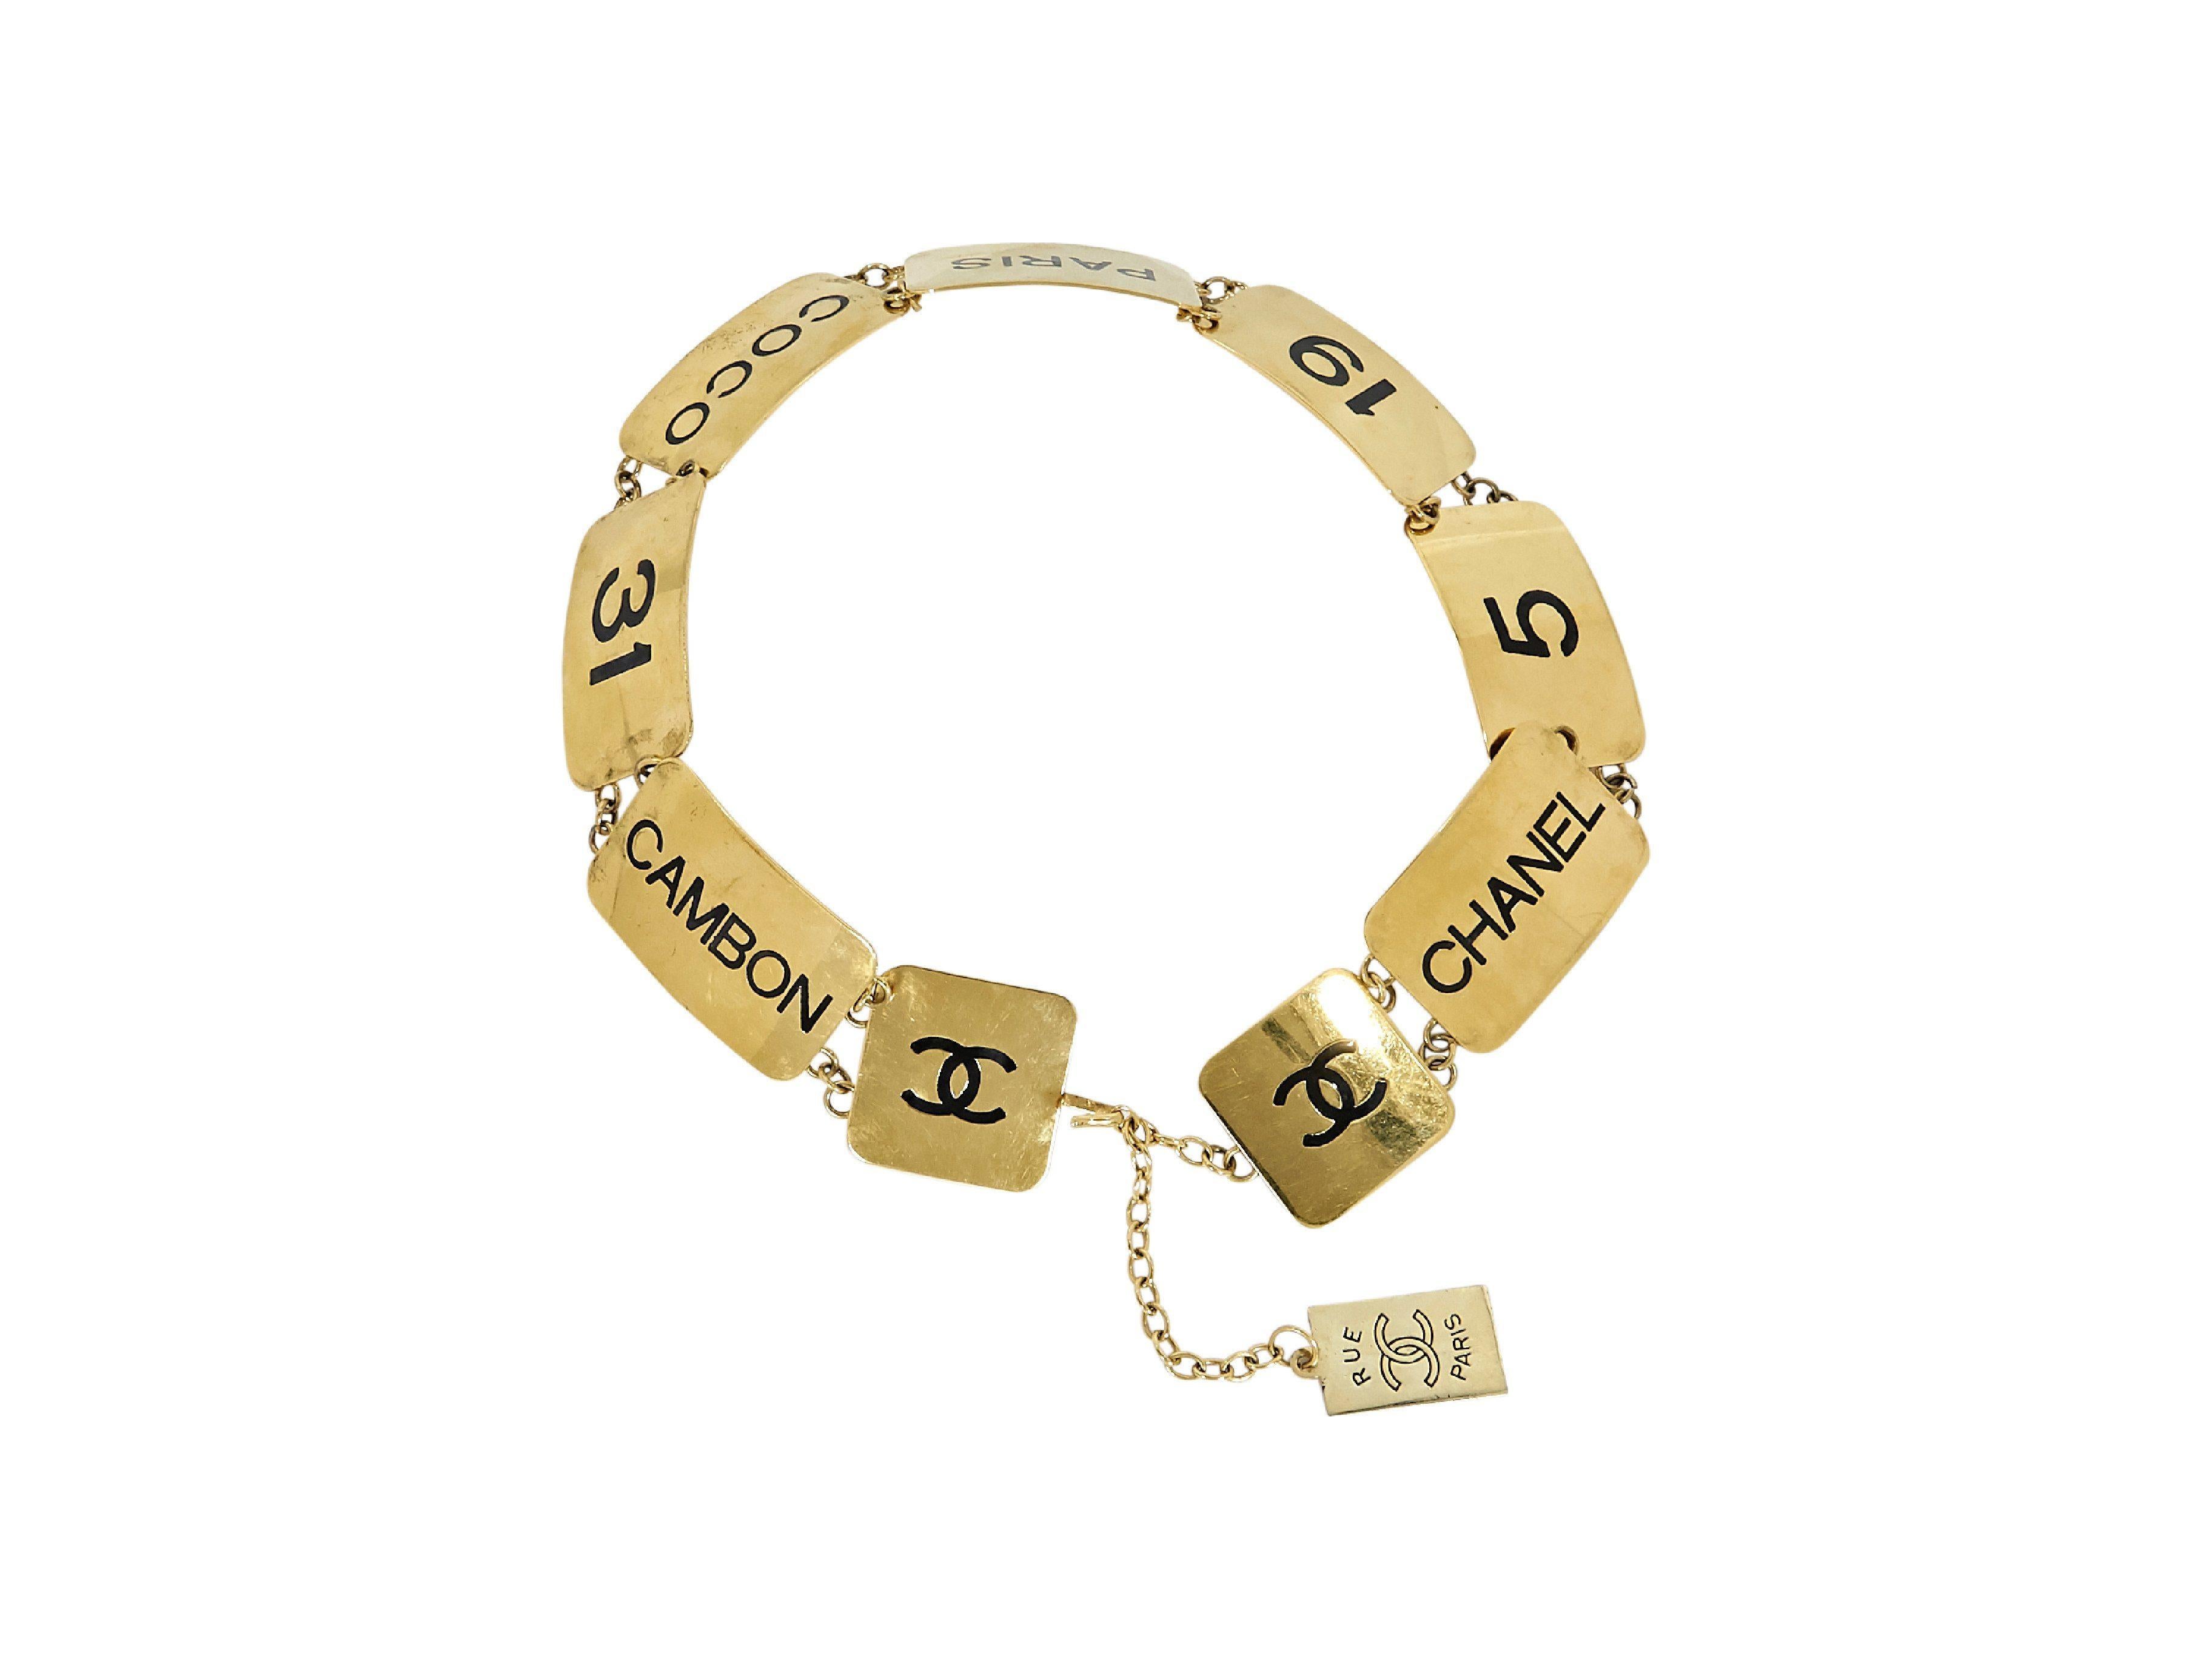 Product details:  Vintage gold plated brass belt by Chanel.  Adjustable hook closure. Signature interlocking CC logo. 27-33